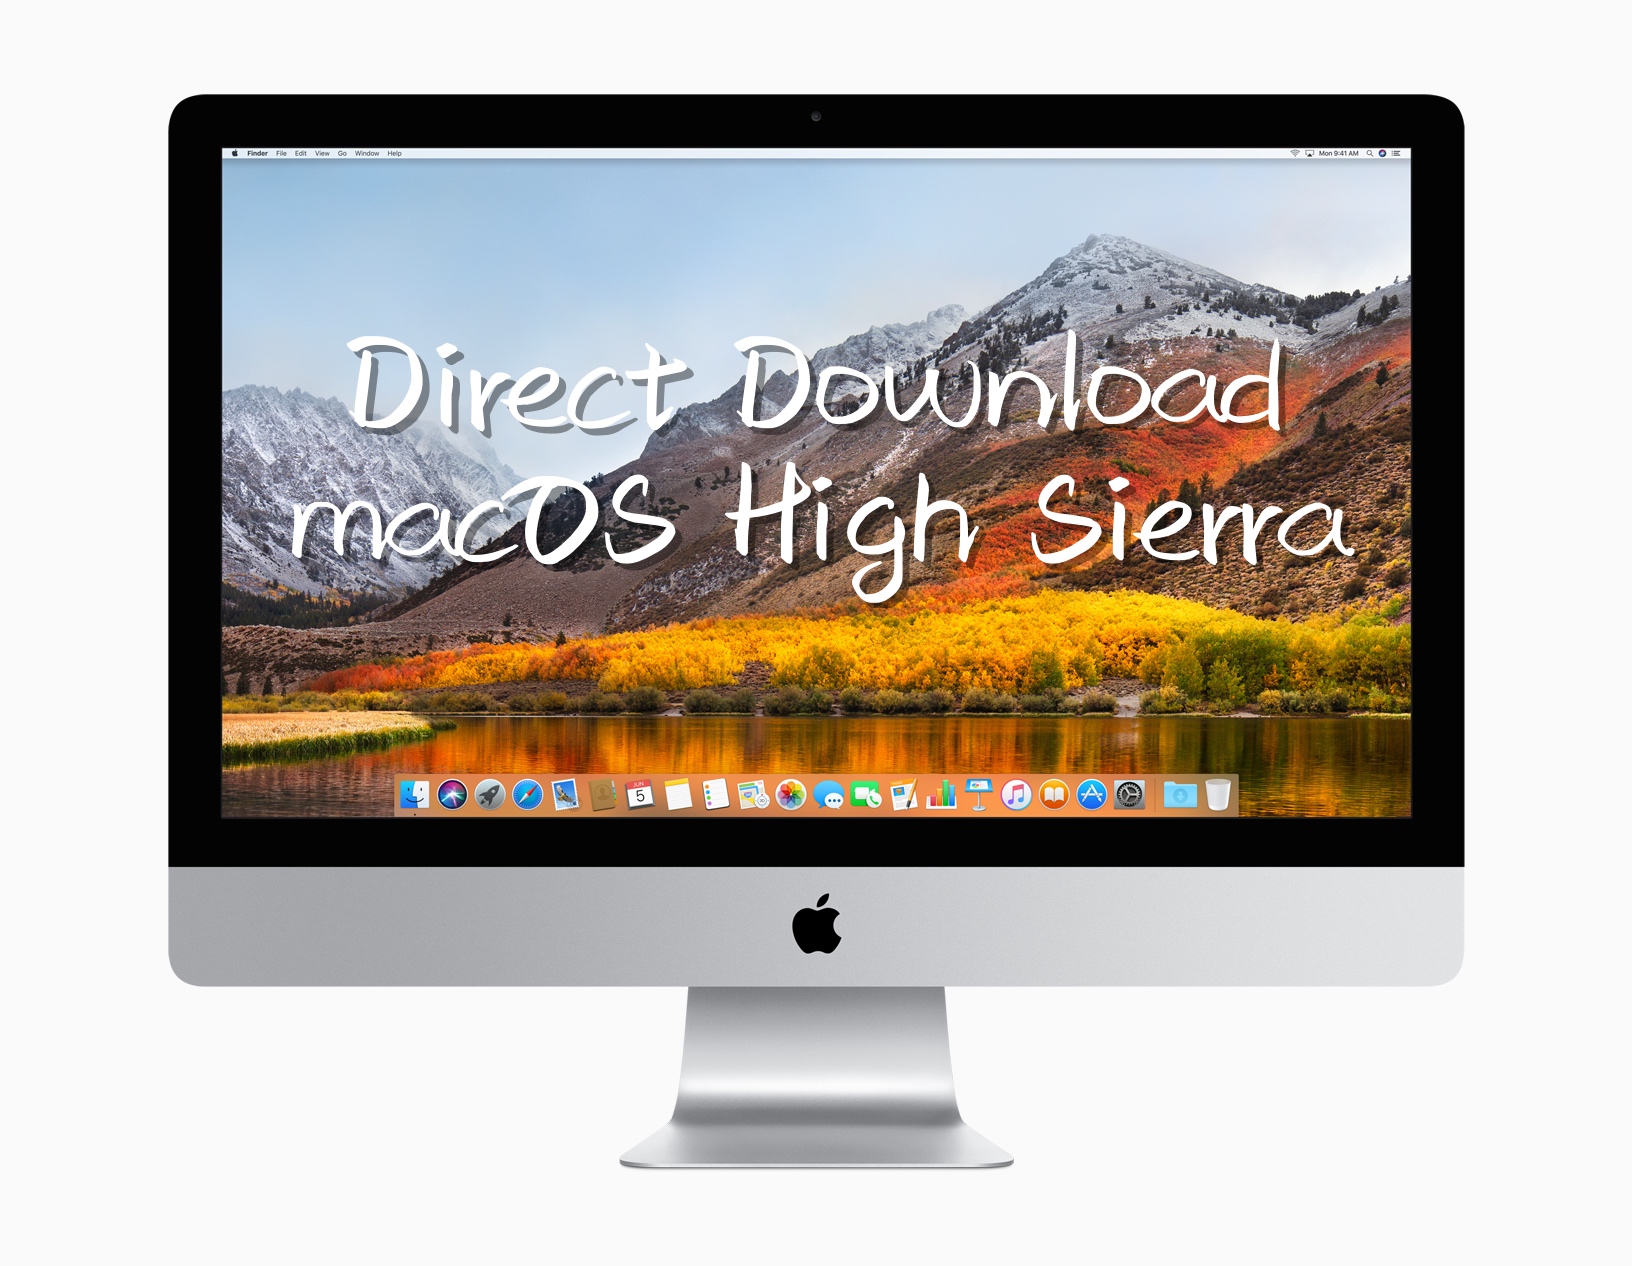 High sierra 10.13.5 download dmg